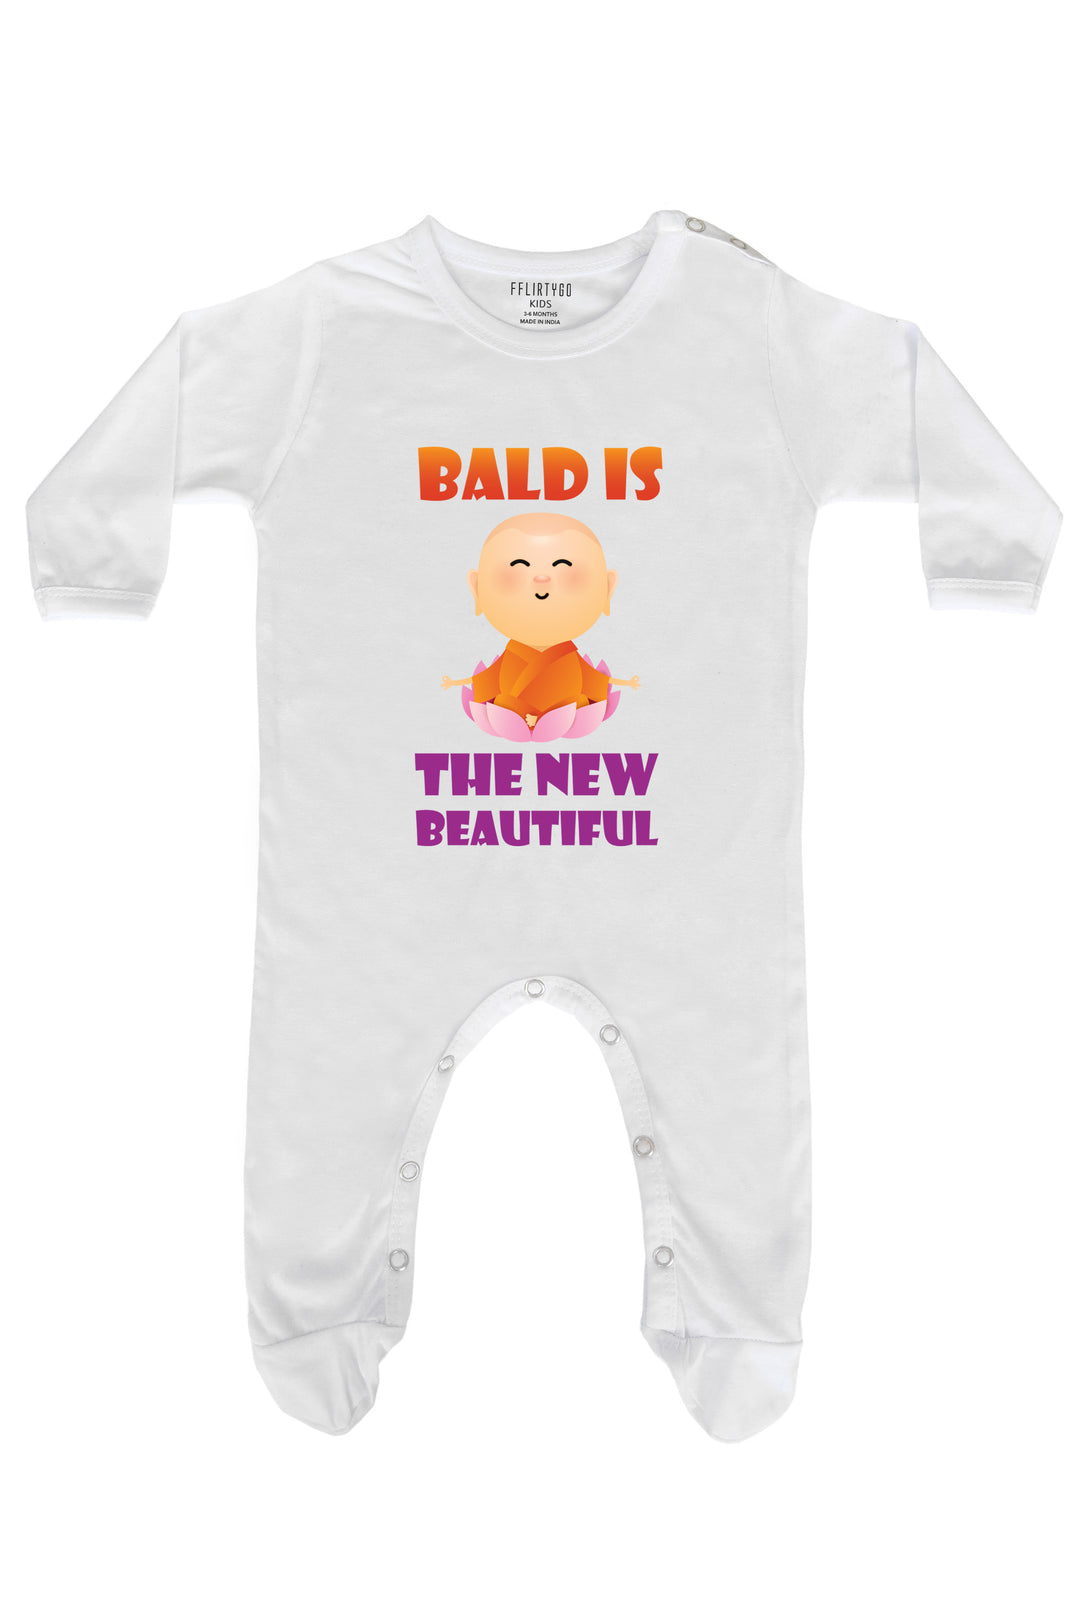 Bald is the New Beautiful Baby Romper | Onesies